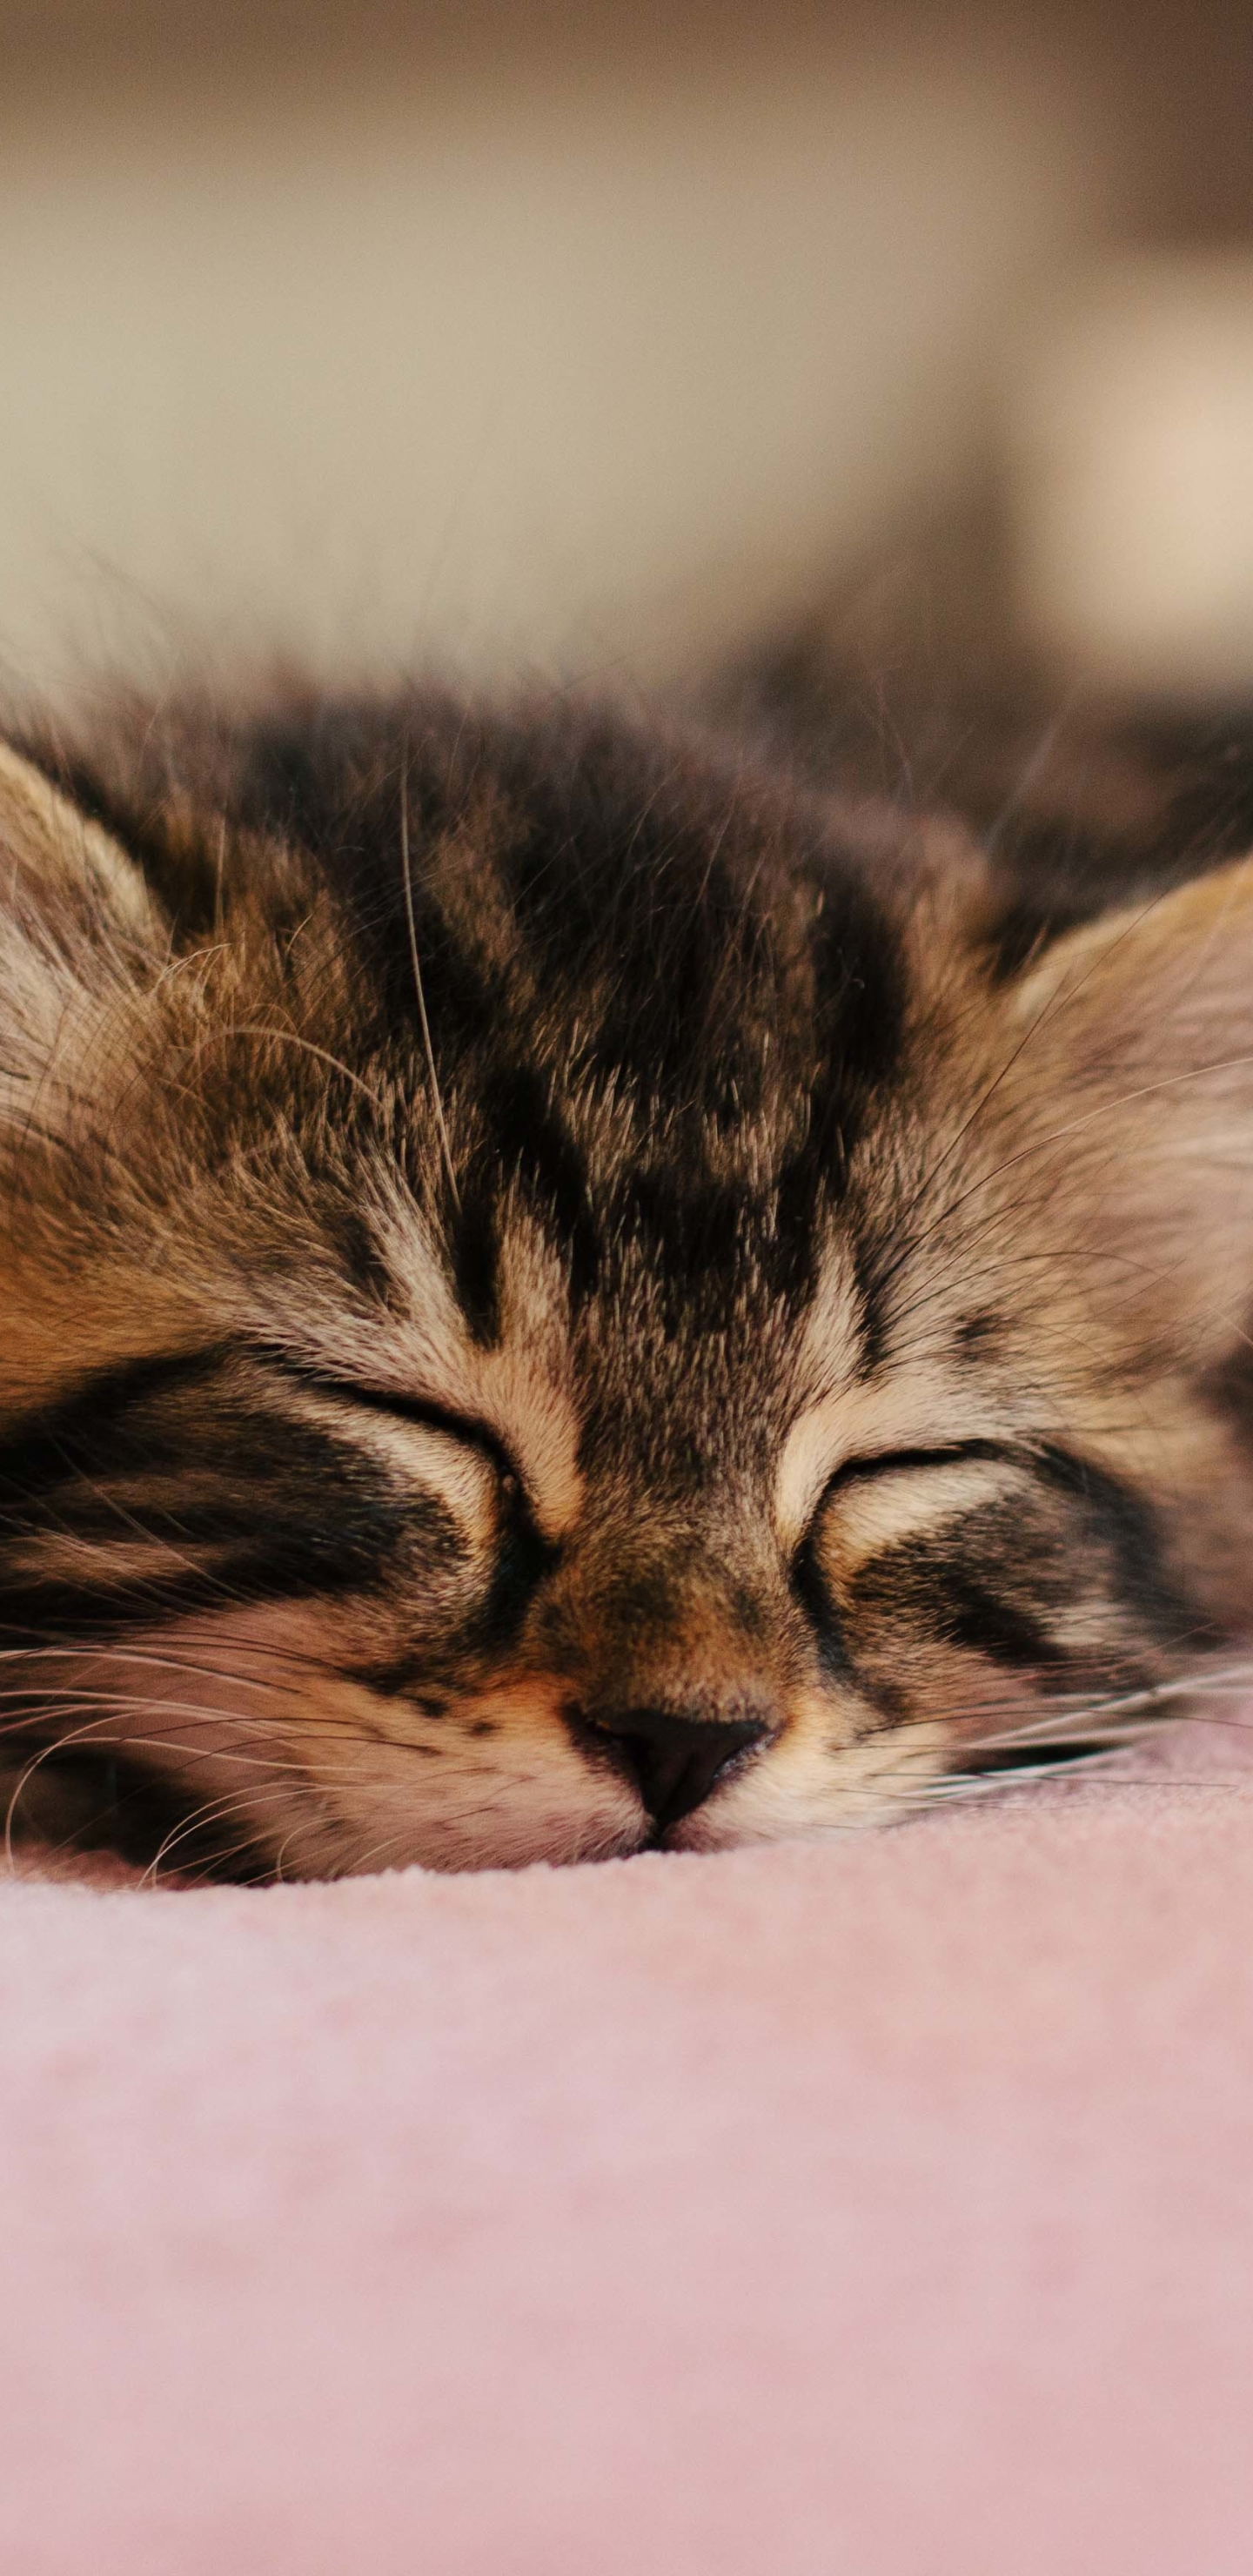 Descarga gratuita de fondo de pantalla para móvil de Animales, Gatos, Gato, Gatito, Dormido, Bebe Animal.